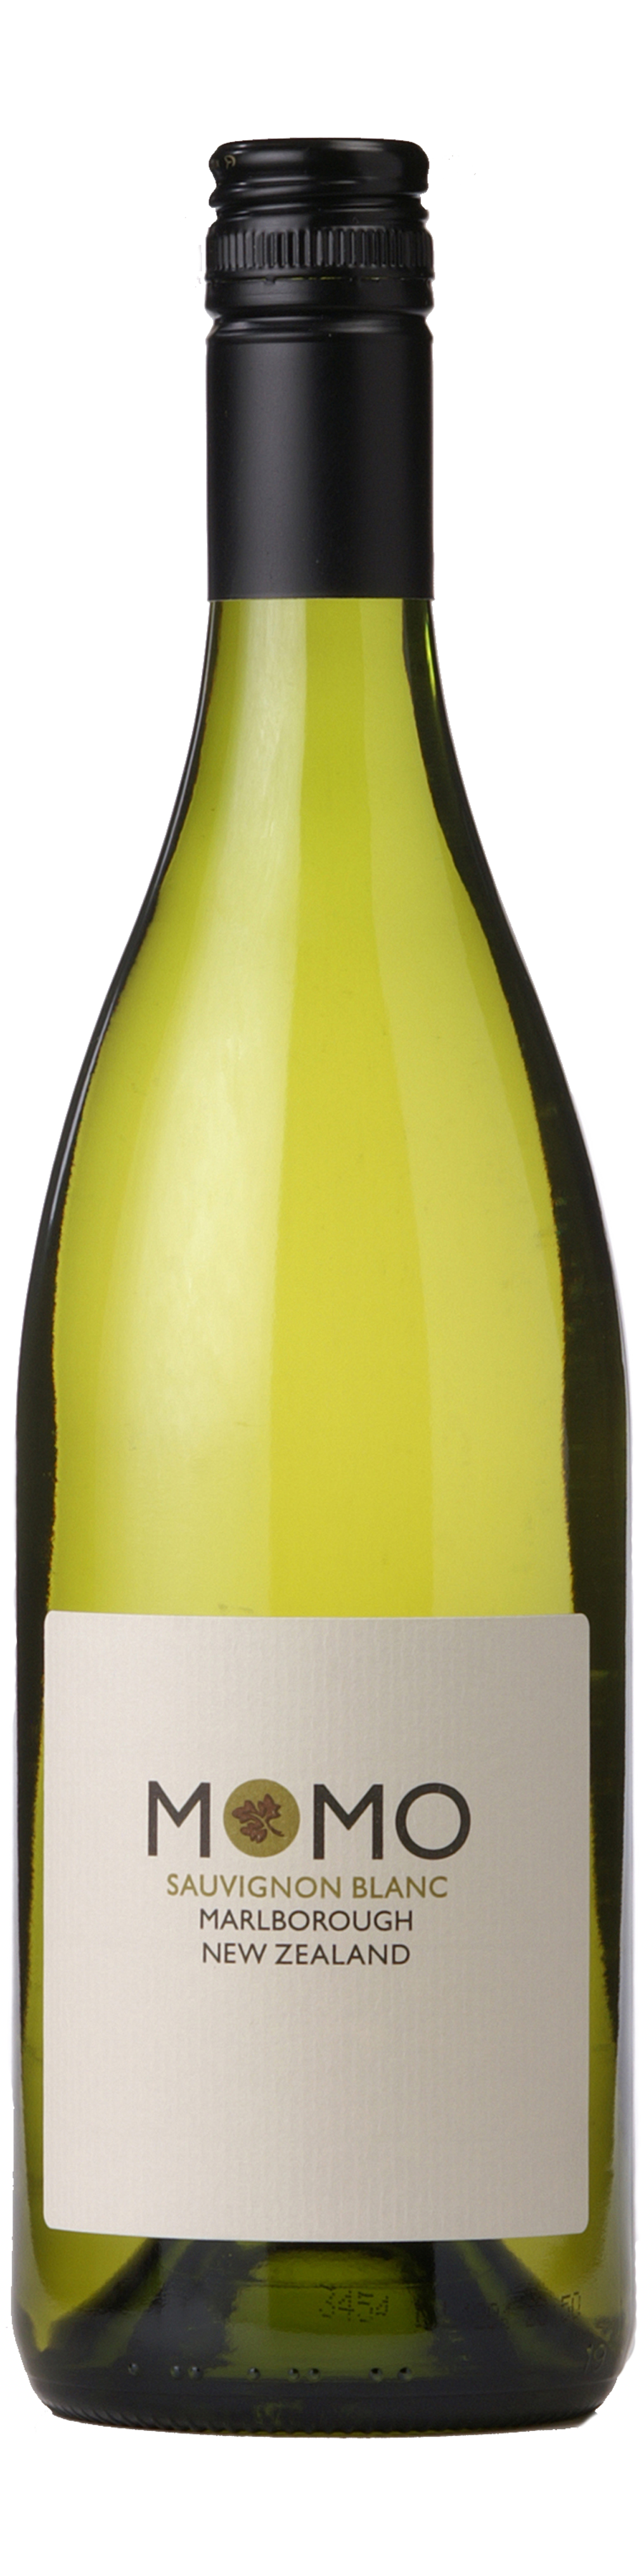 Bottle shot of 2013 Momo Sauvignon Blanc